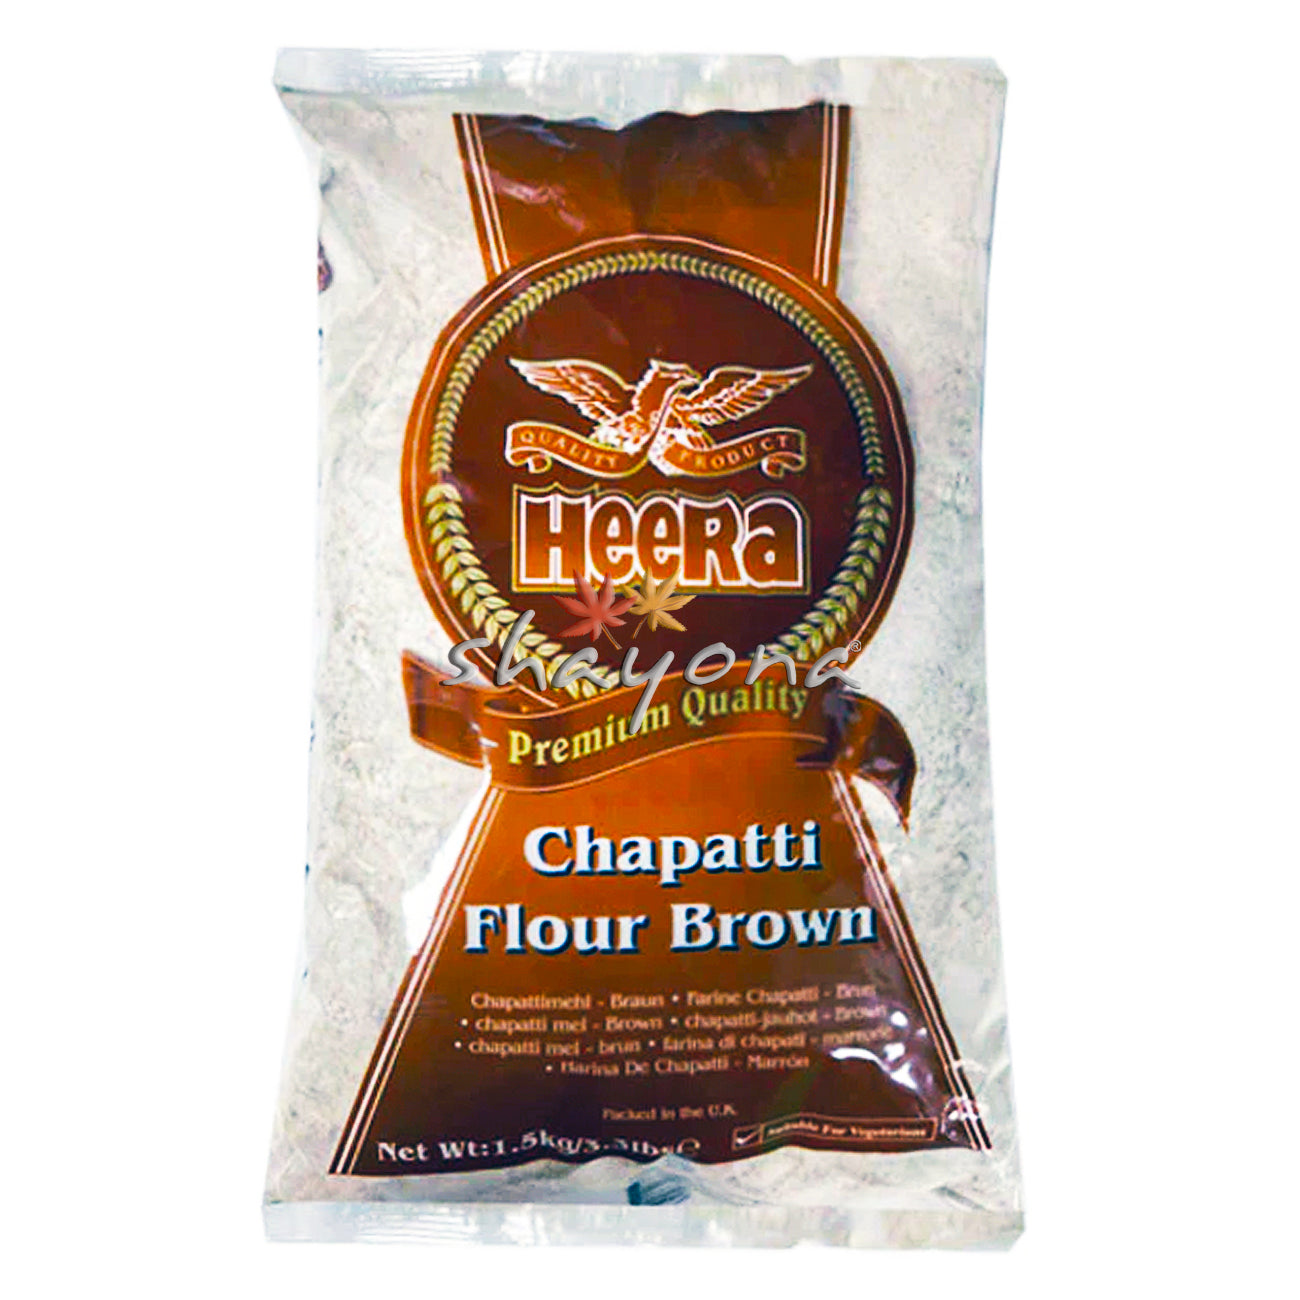 Heera Chapatti Flour Brown